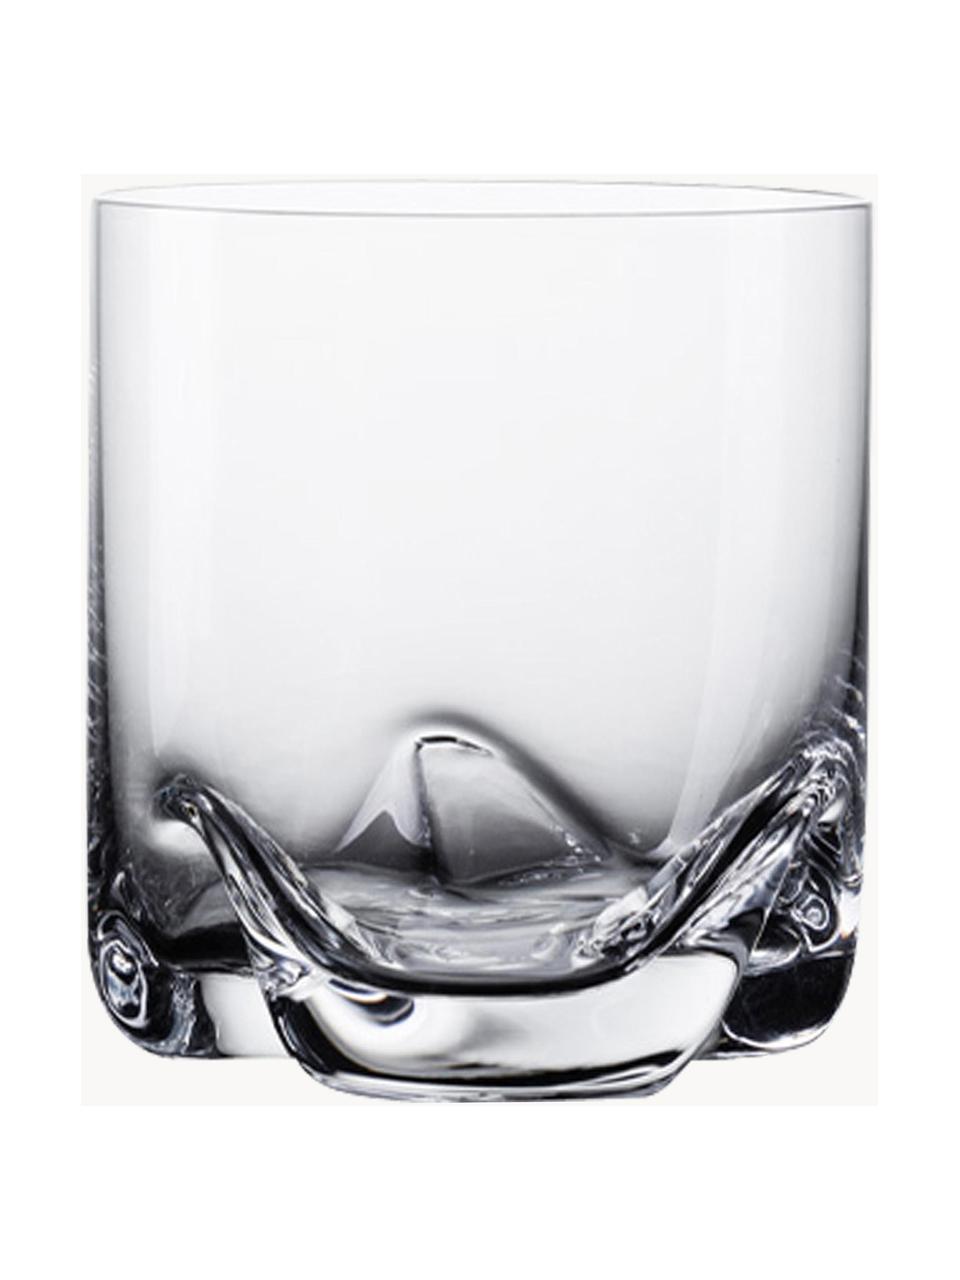 Bicchiere trasparente Sol 4 pz, Vetro, Trasparente, Ø 8 x Alt. 9 cm, 300 ml